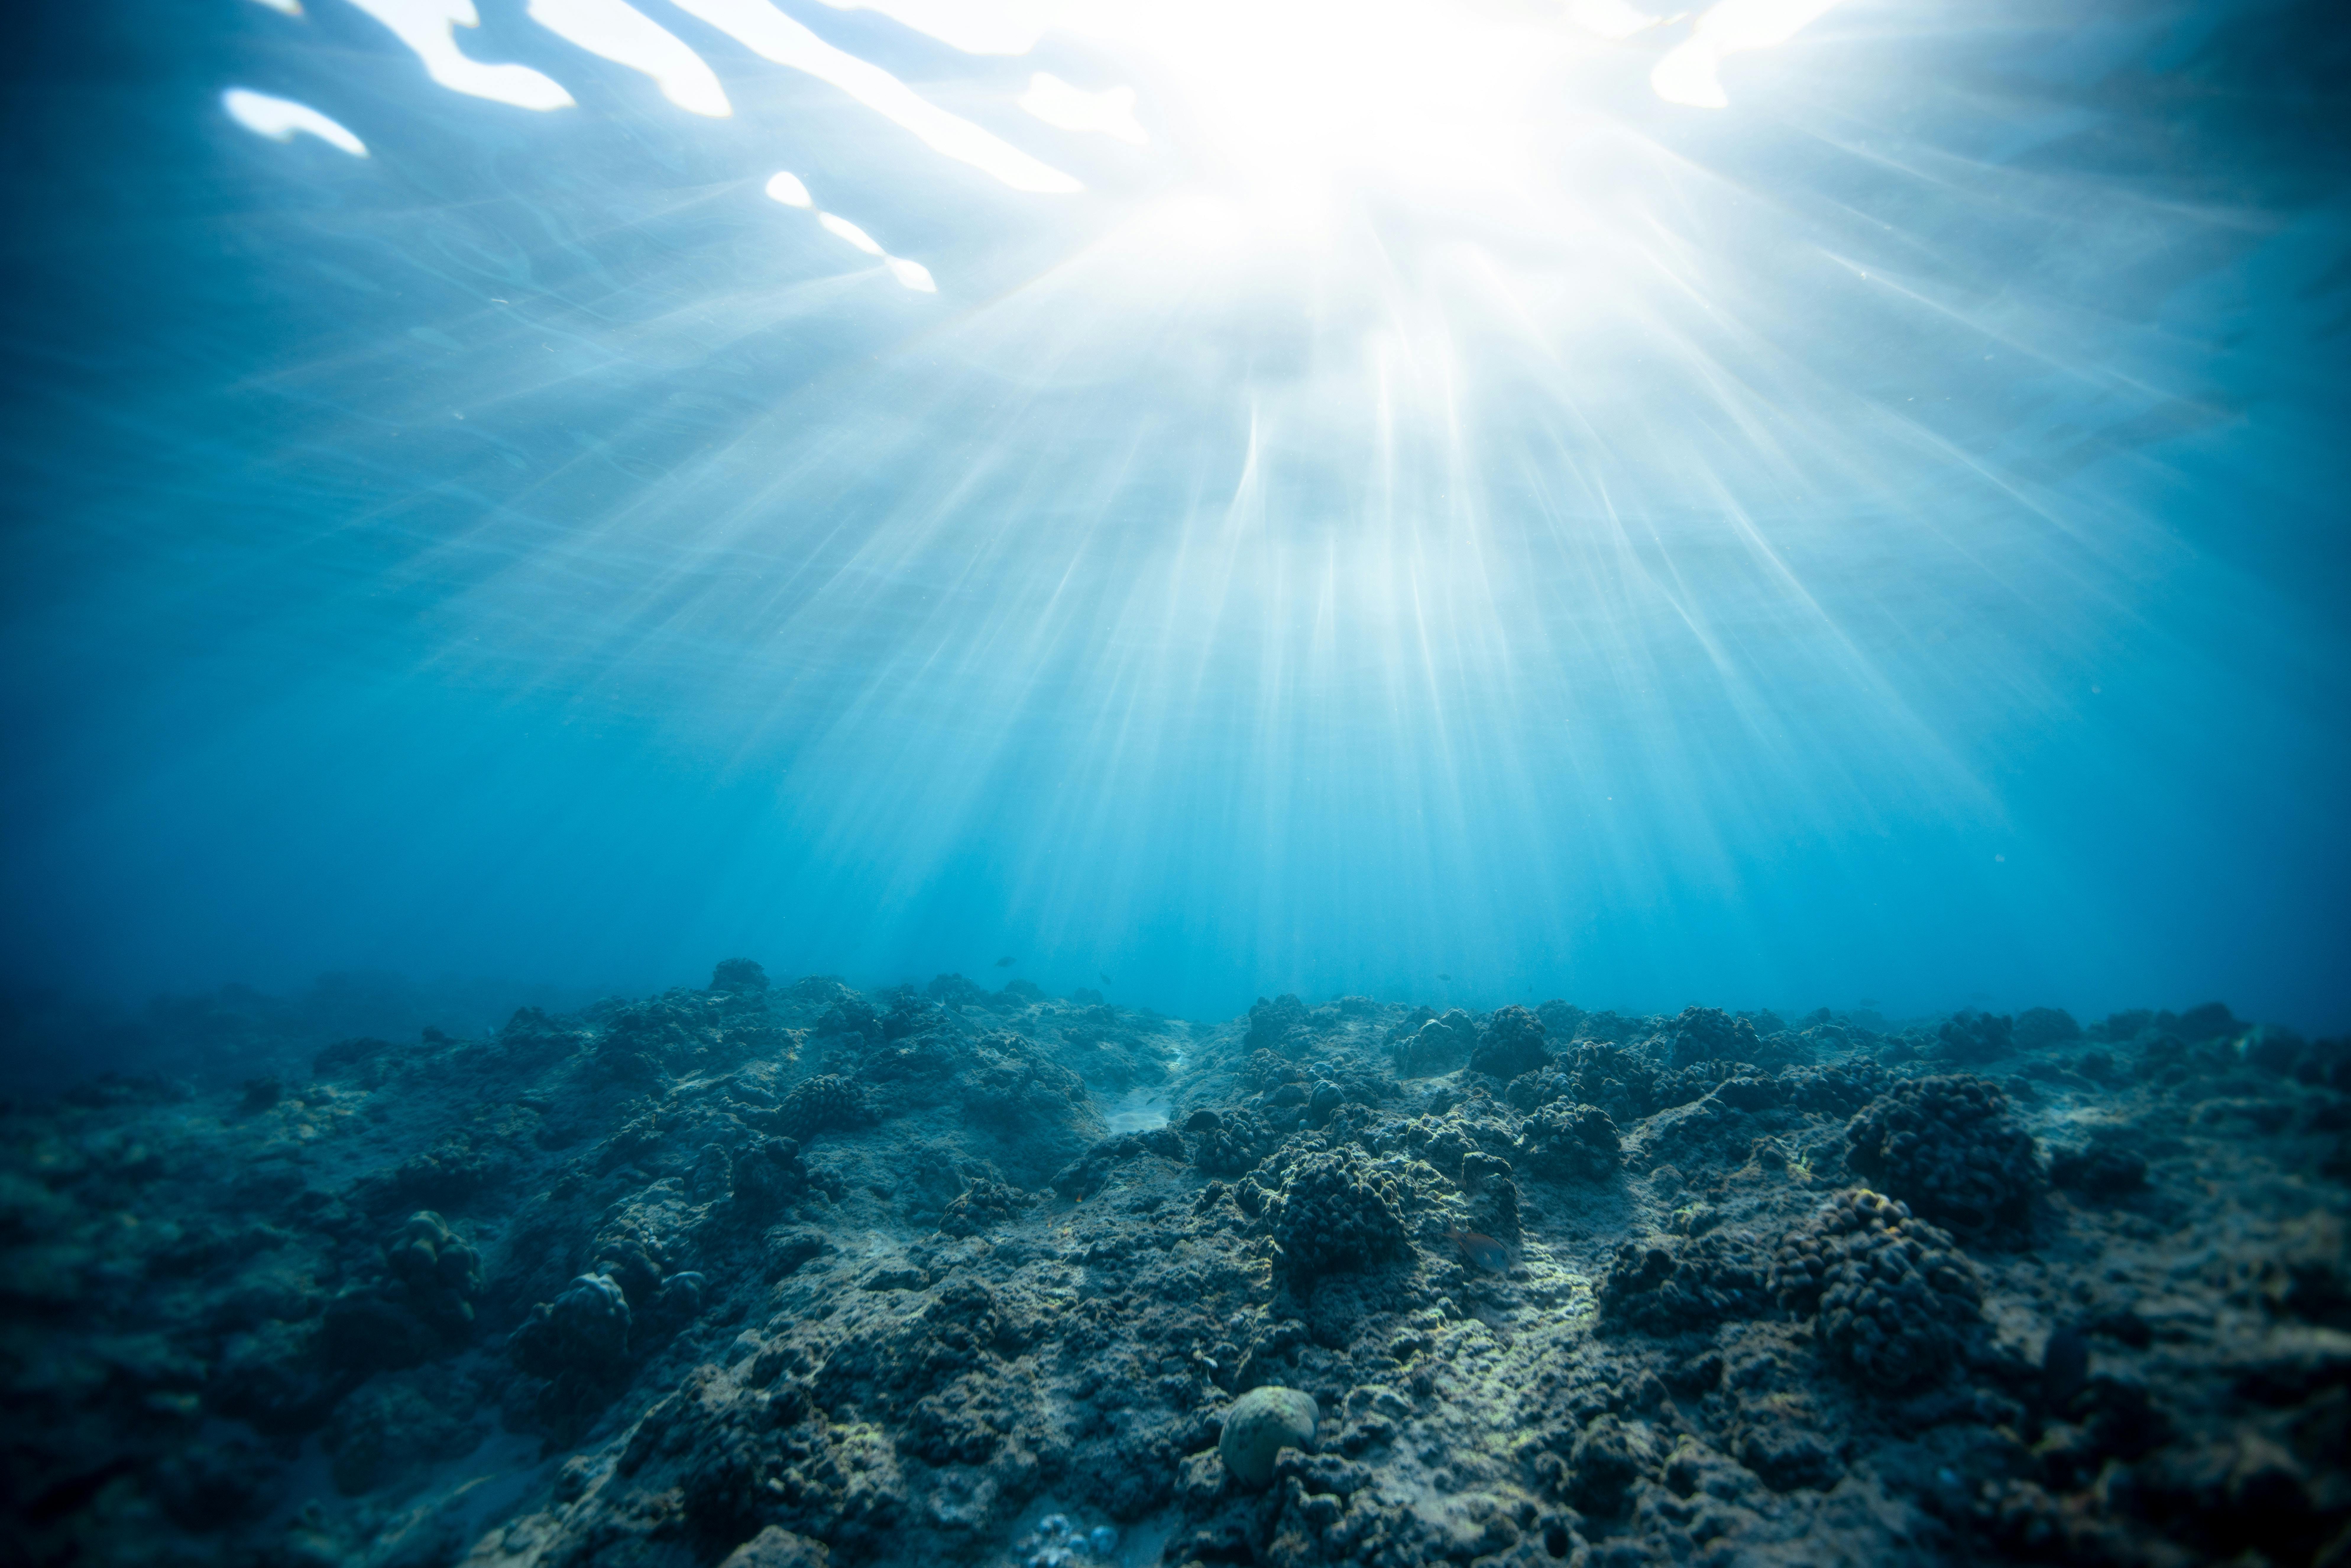 Underwater Photography of Ocean · Free Stock Photo